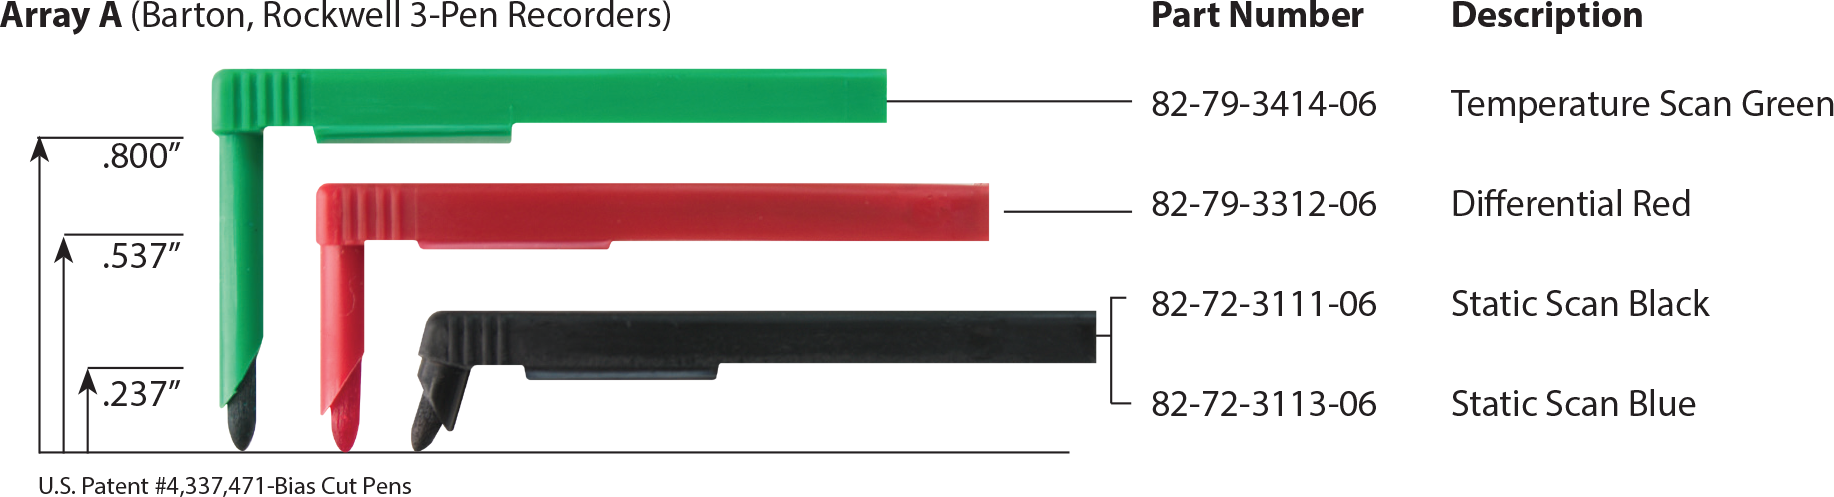 Disposable Black Pens for Barton Chart Recorder Graphic Controls 82-72-0111-06 